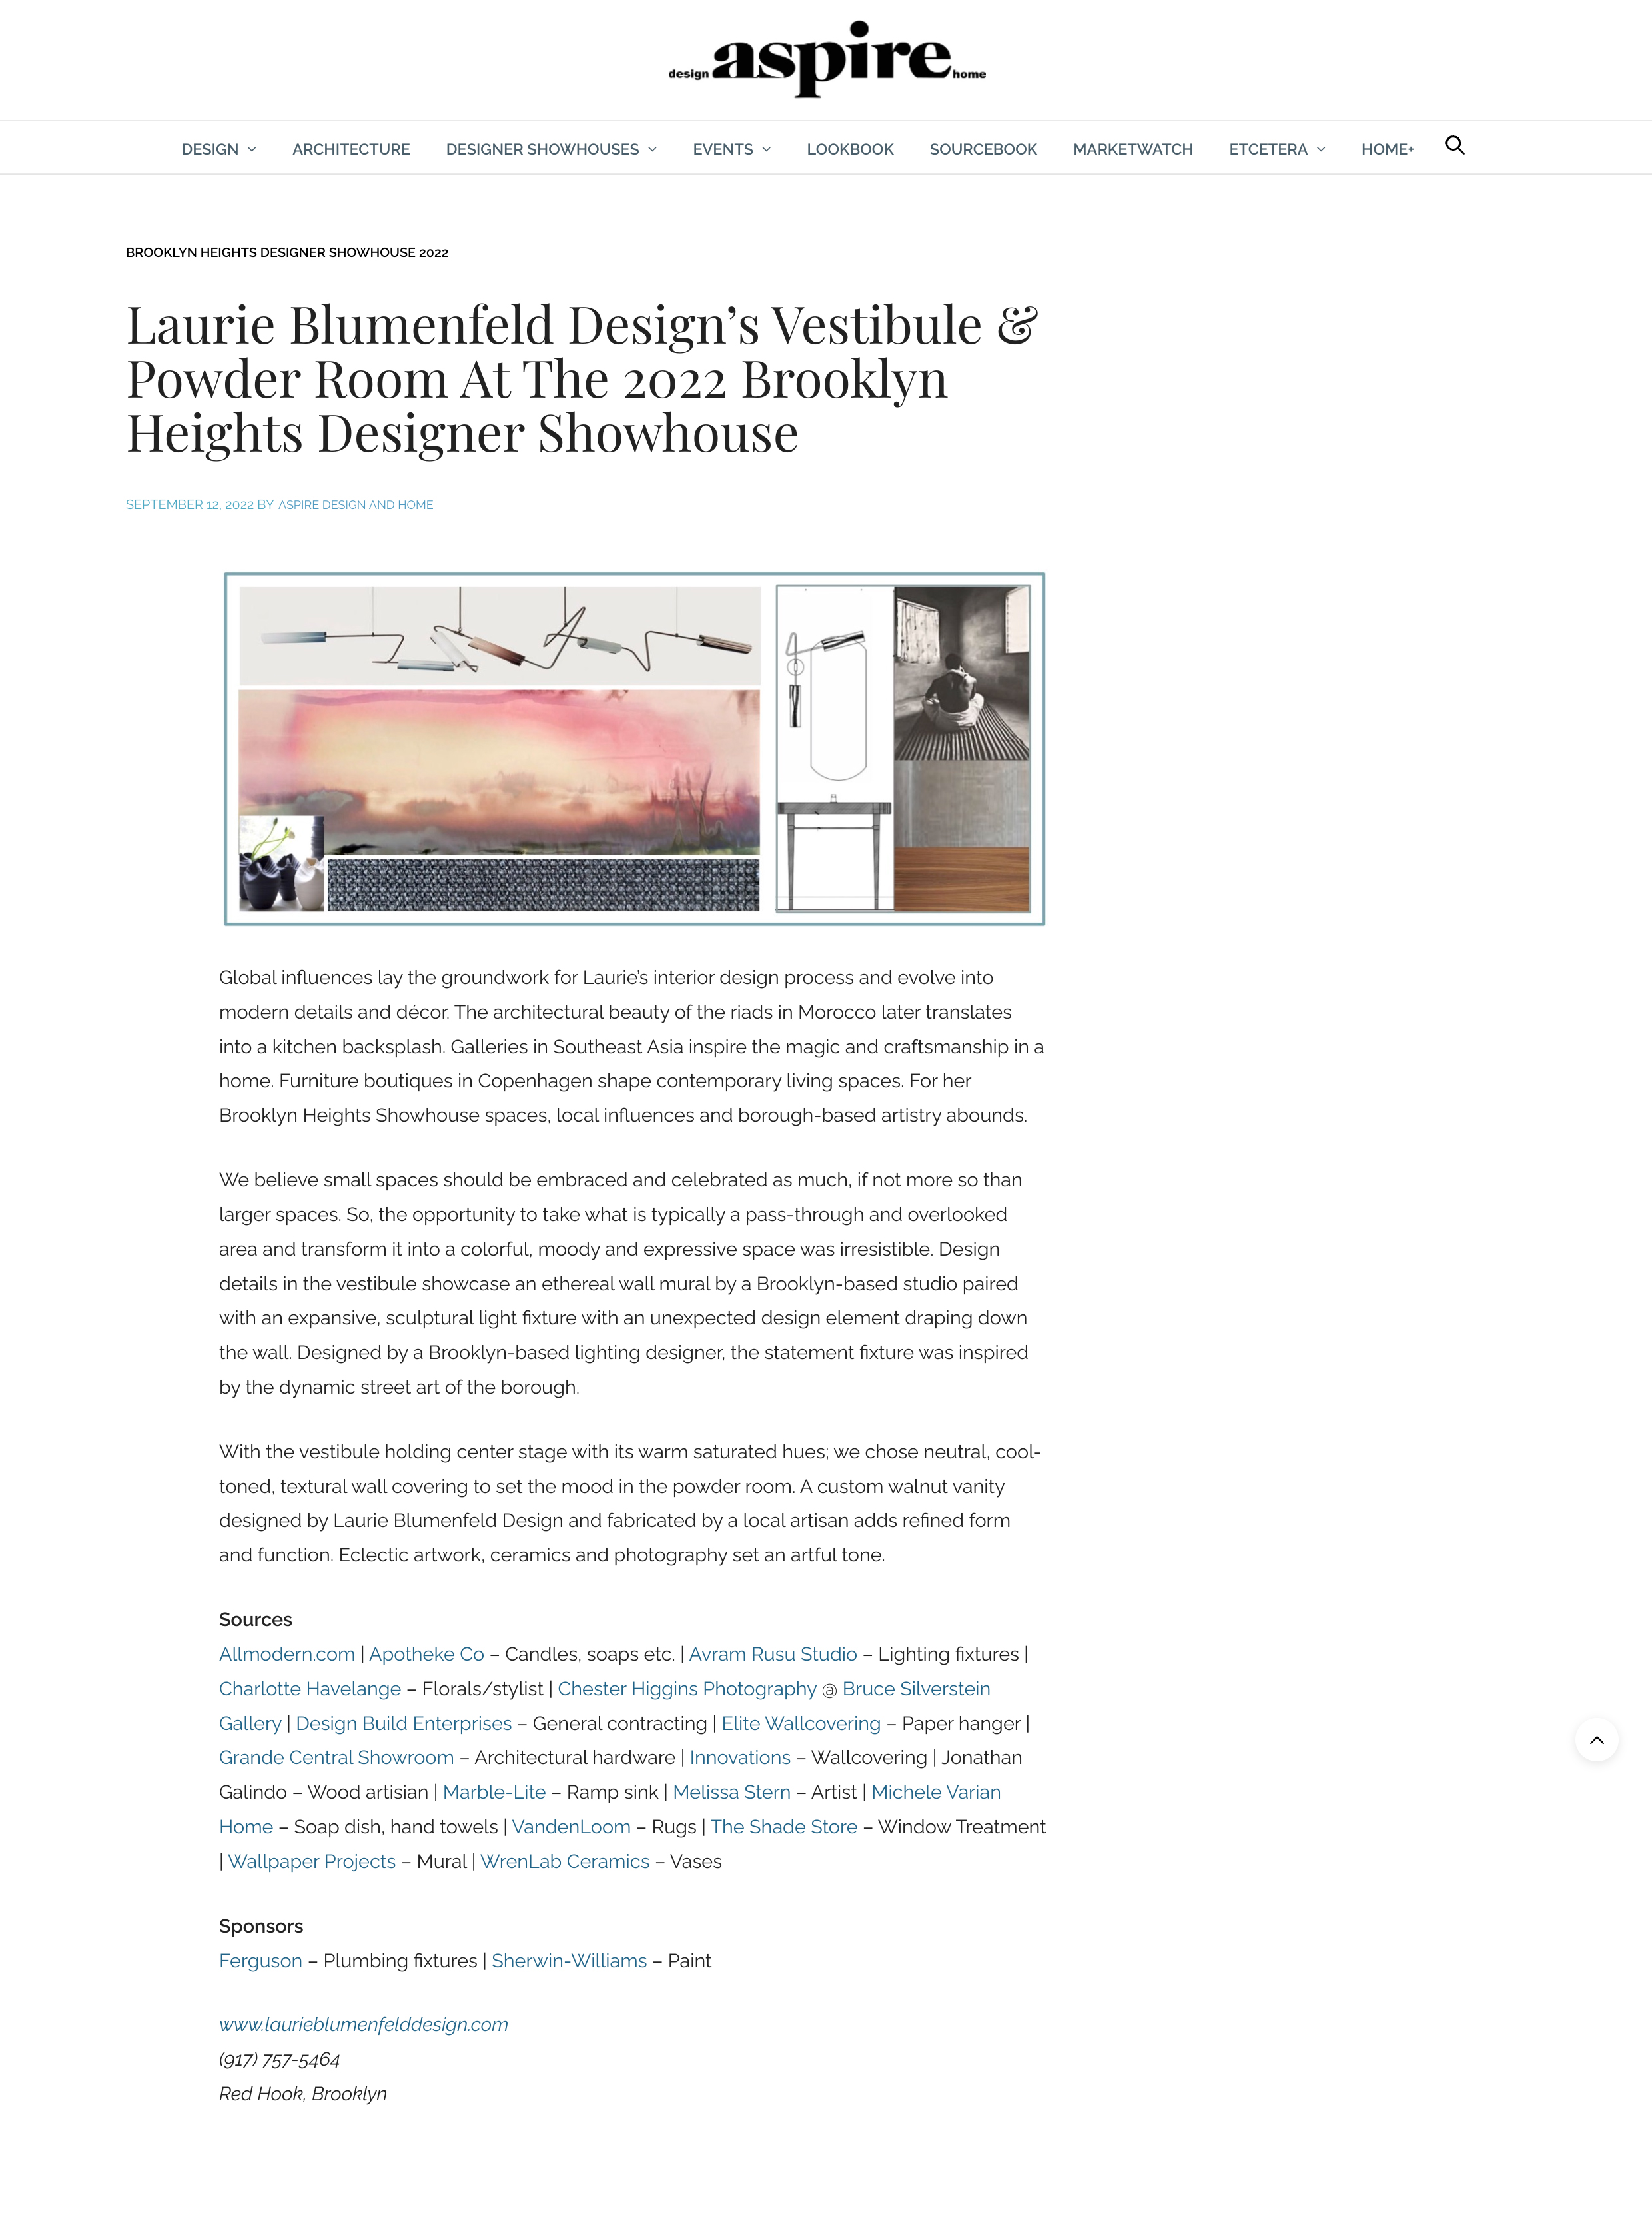 Laurie Blumenfeld Design’s Vestibule & Powder Room At The 2022 Brooklyn Heights Designer Showhouse